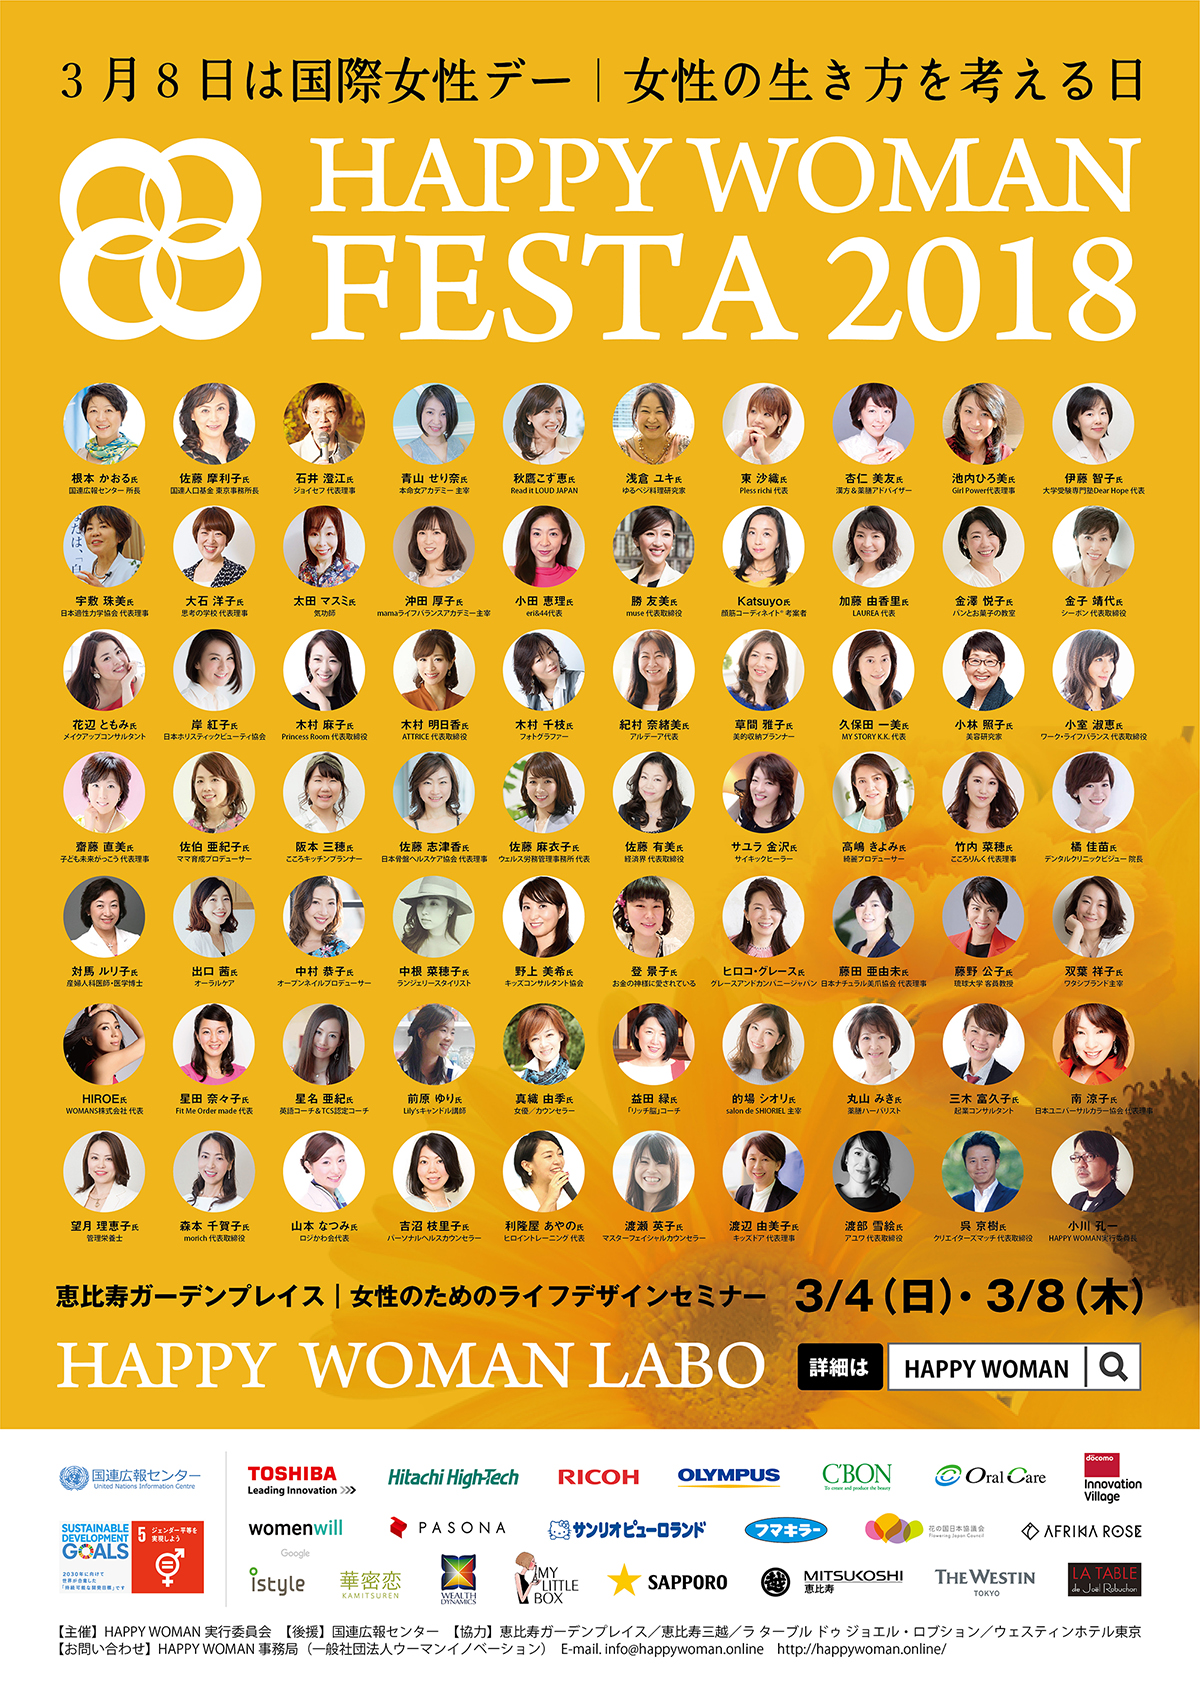 HAPPY WOMAN FESTA YEBISU 2018